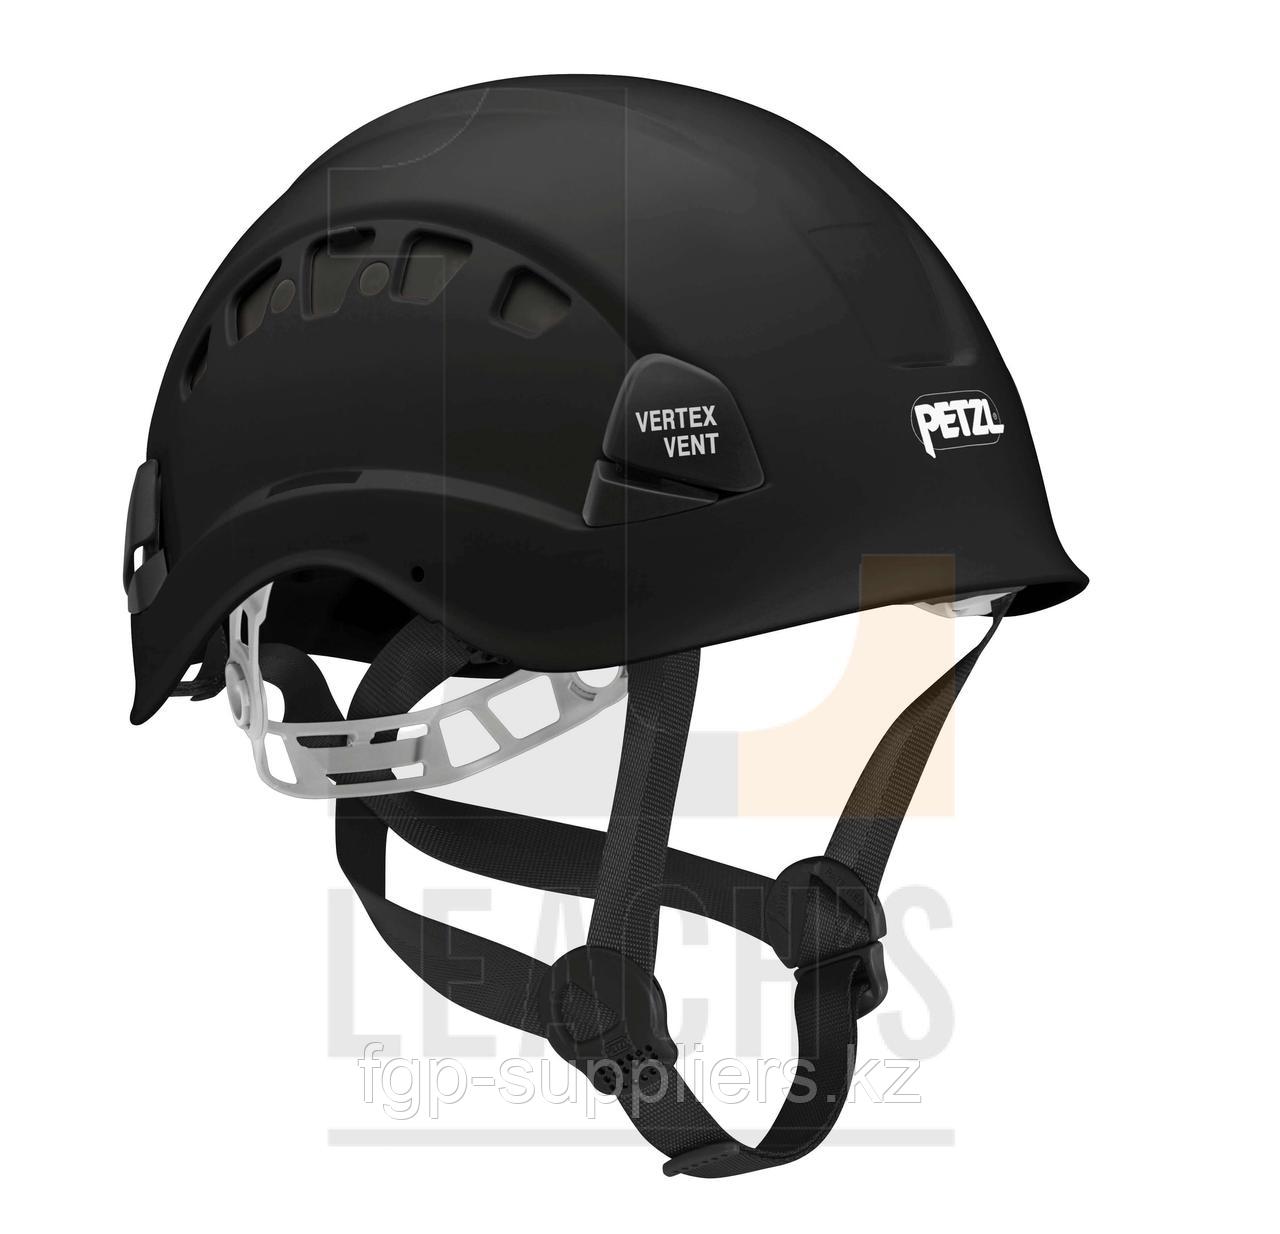 Petzl Vertex Vent Safety Helmet - Choose your colour / Petzl Vertex Vent защитная каска - цвет на выбор